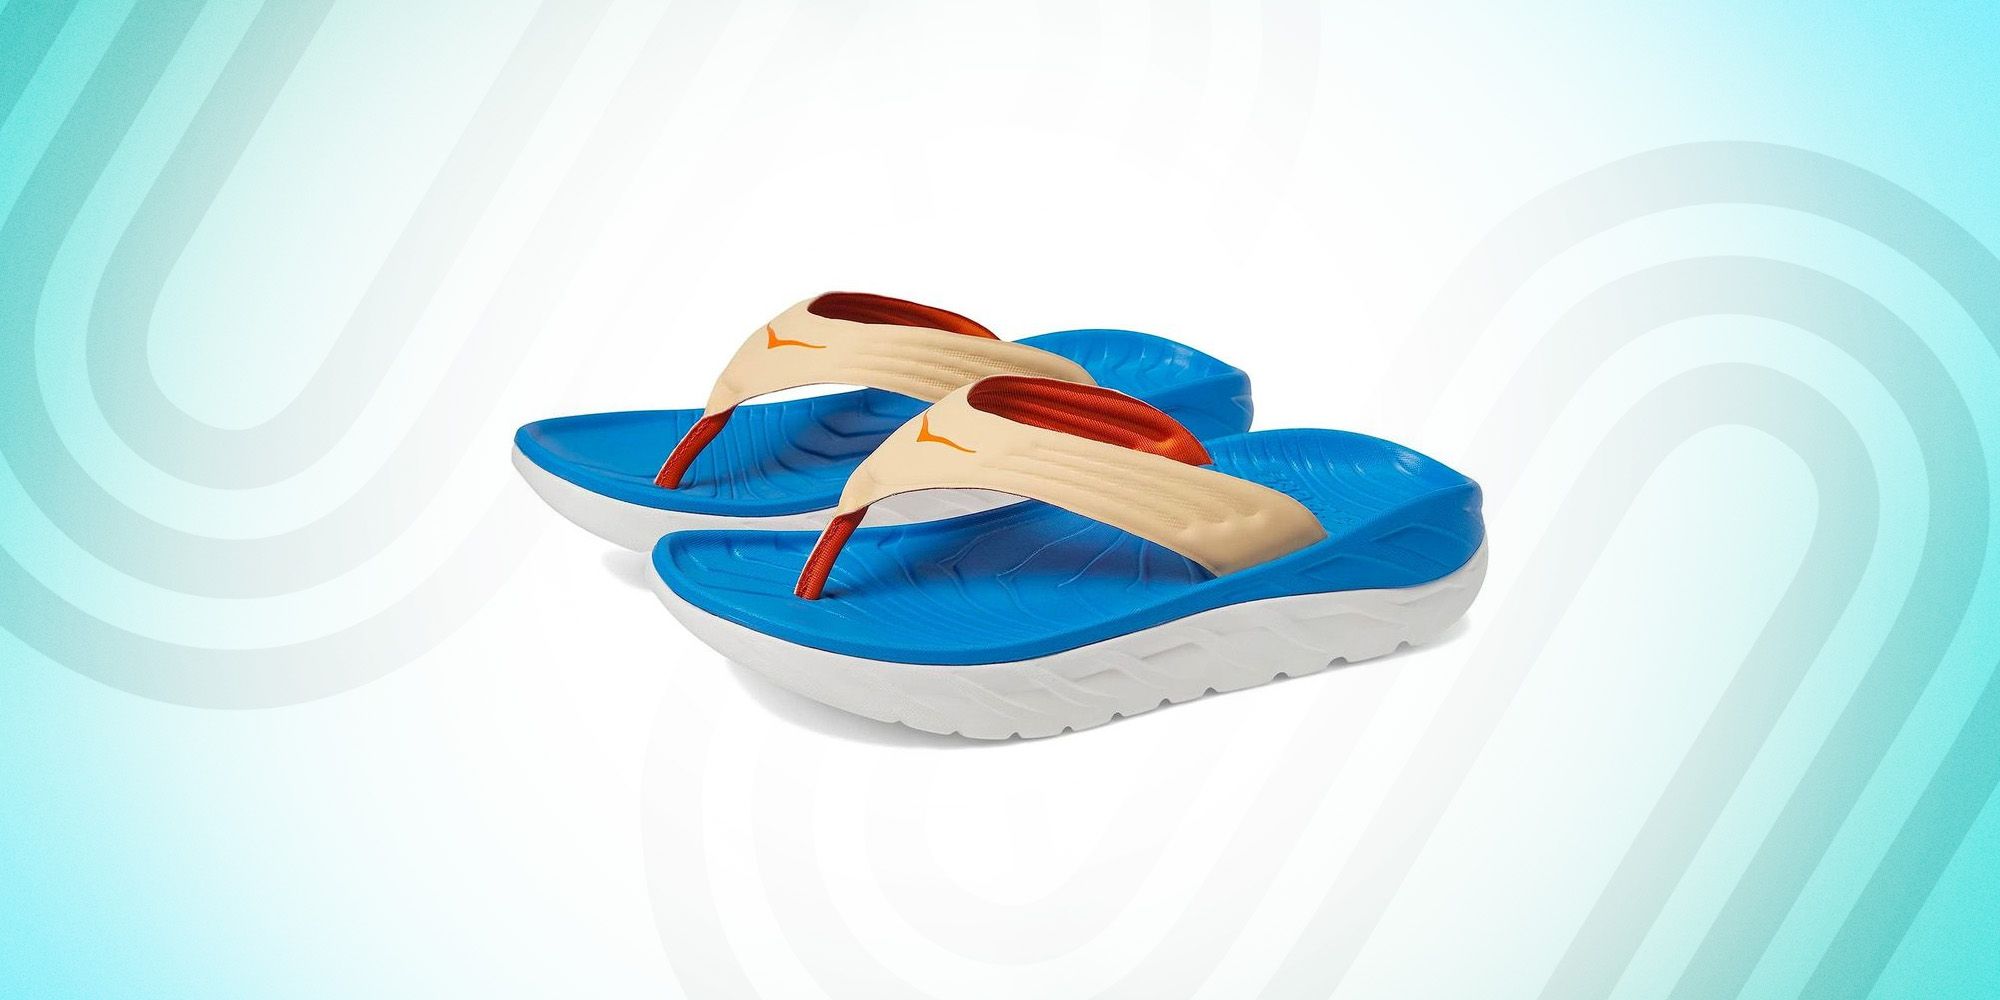 Slide sandals Yeezy x Adidas Beige size 44.5 EU in Plastic - 39284645